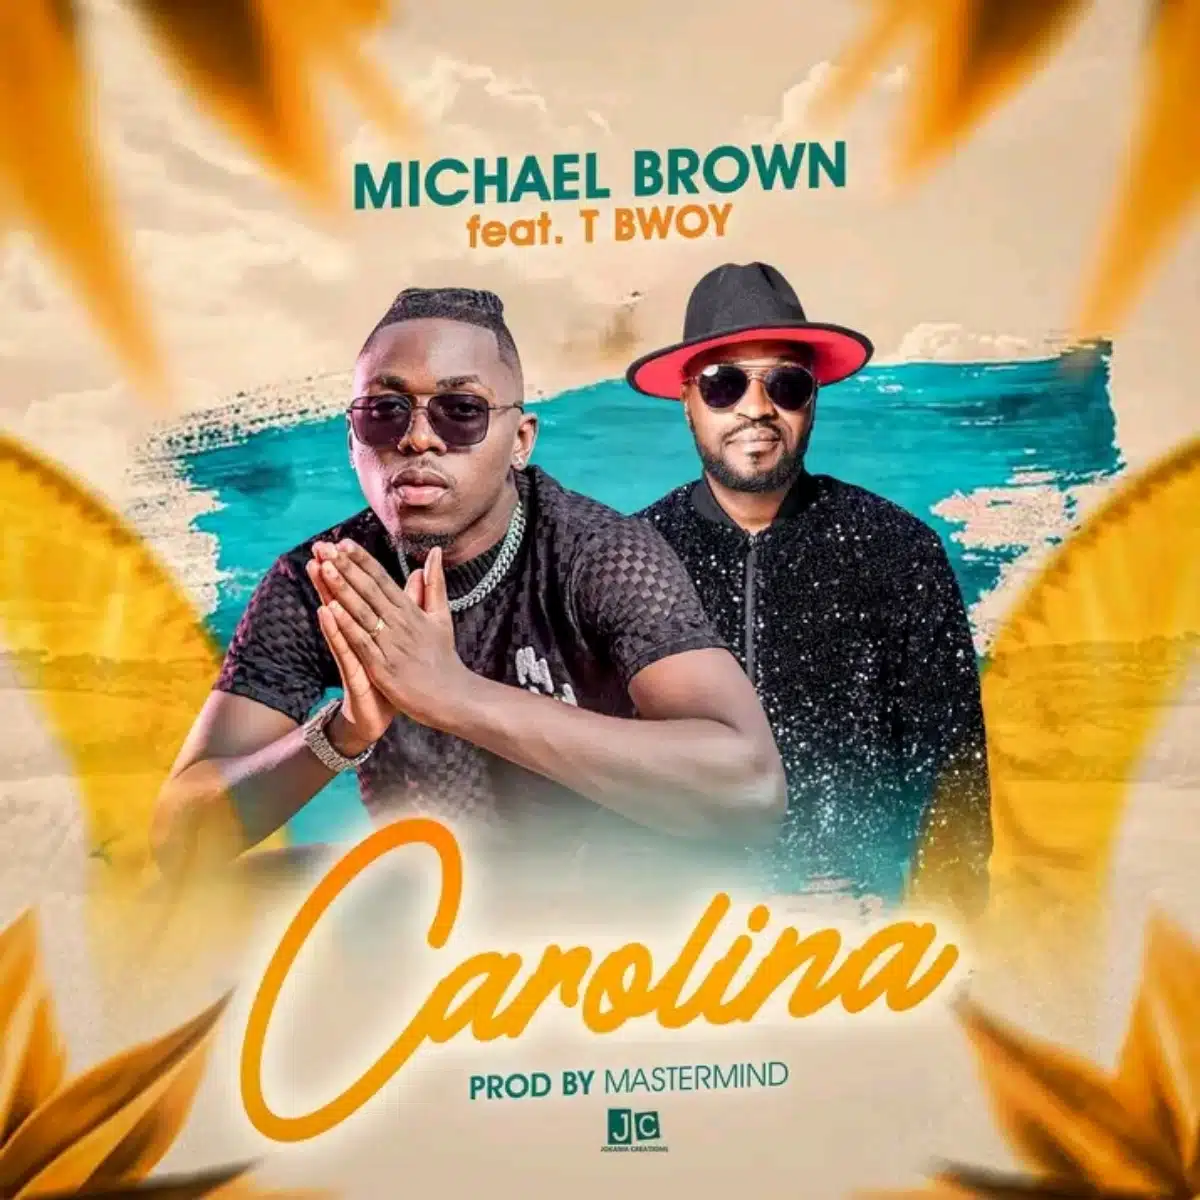 DOWNLOAD: Michael Brown Ft. T Bwoy – “Carolina” Mp3